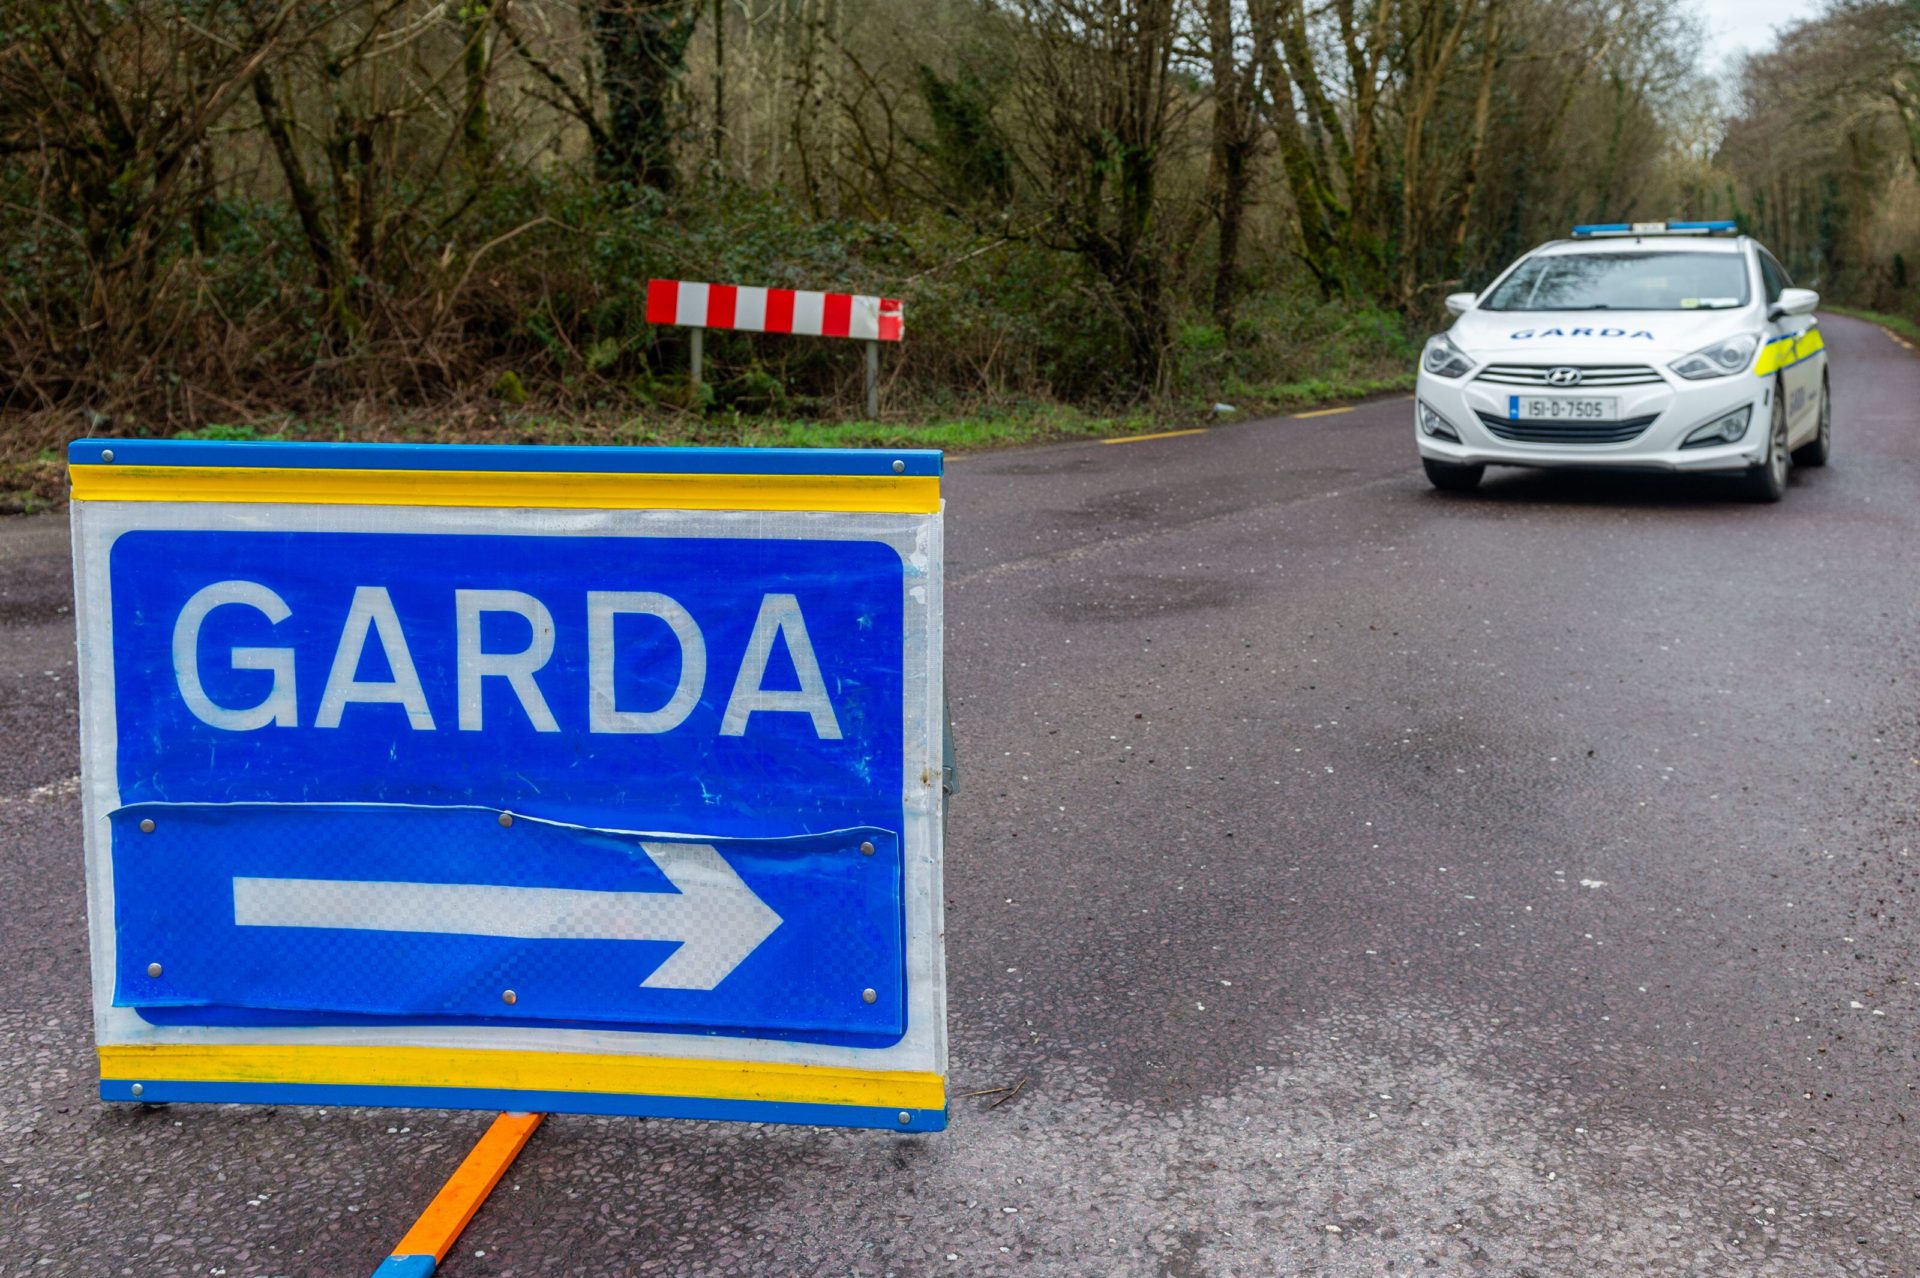 Garda at the scene of a road crash